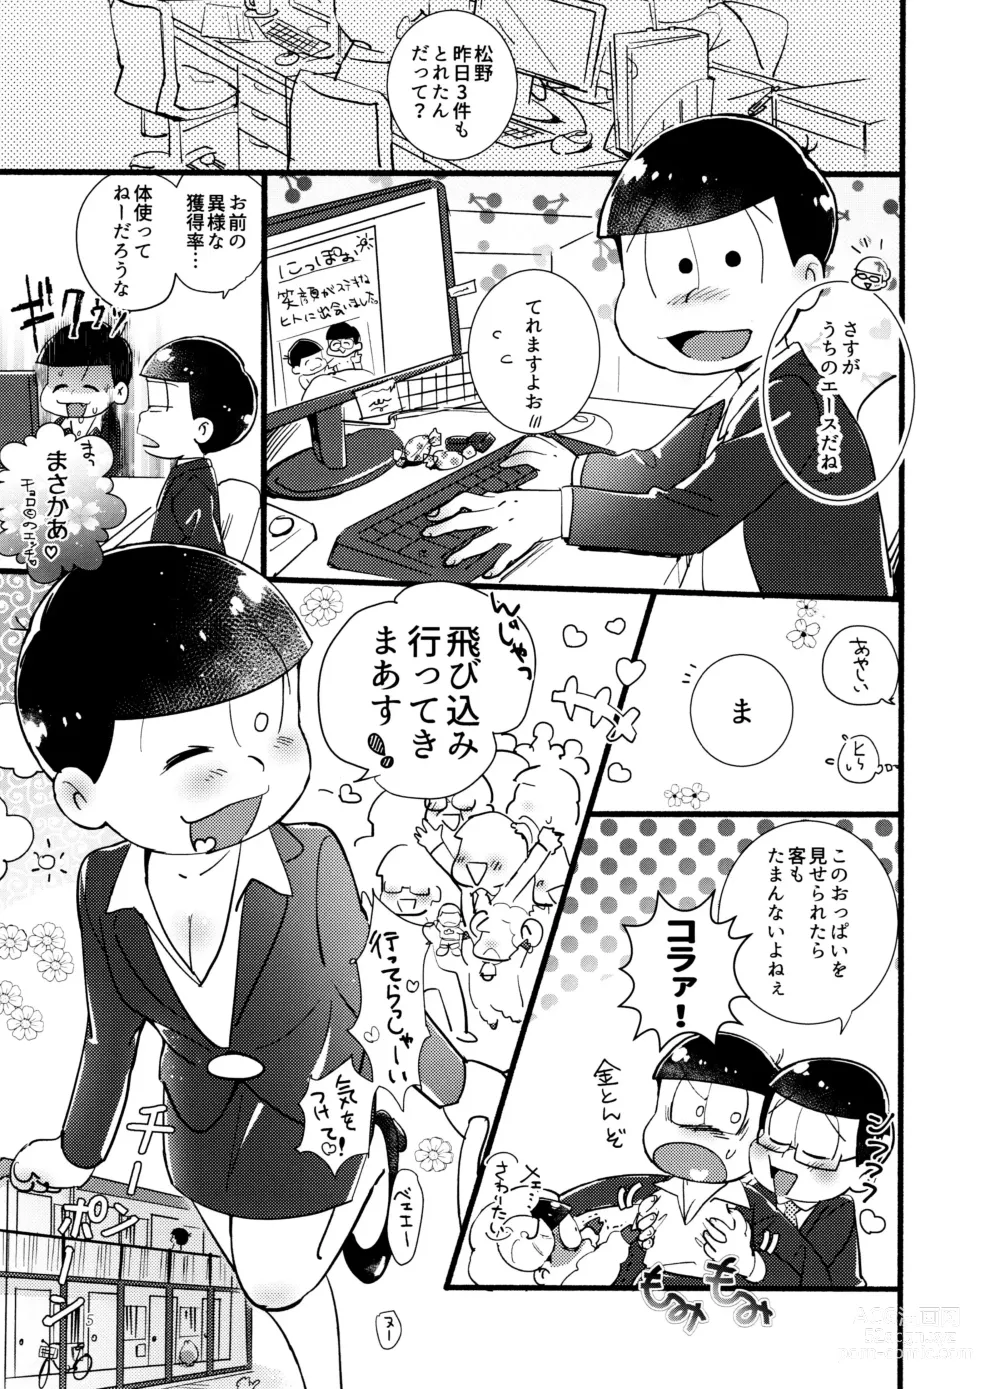 Page 5 of doujinshi Momare Keiyaku